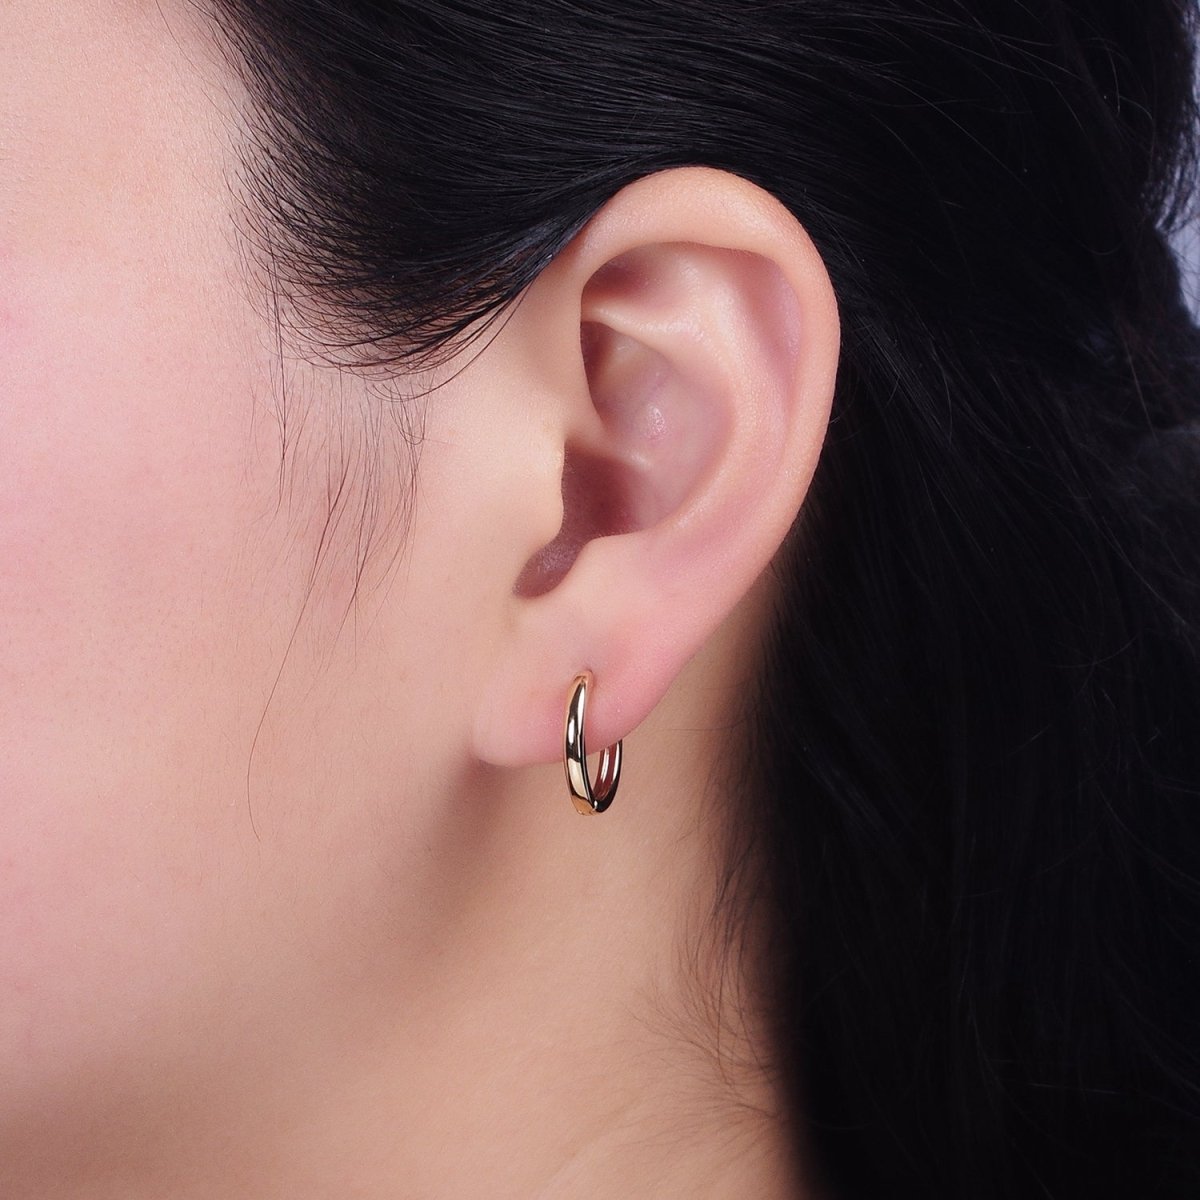 Medium Hoop Earrings in Gold Filled Dainty Gold Hoops Minimalist Earrings AD1396 AD1397 - DLUXCA